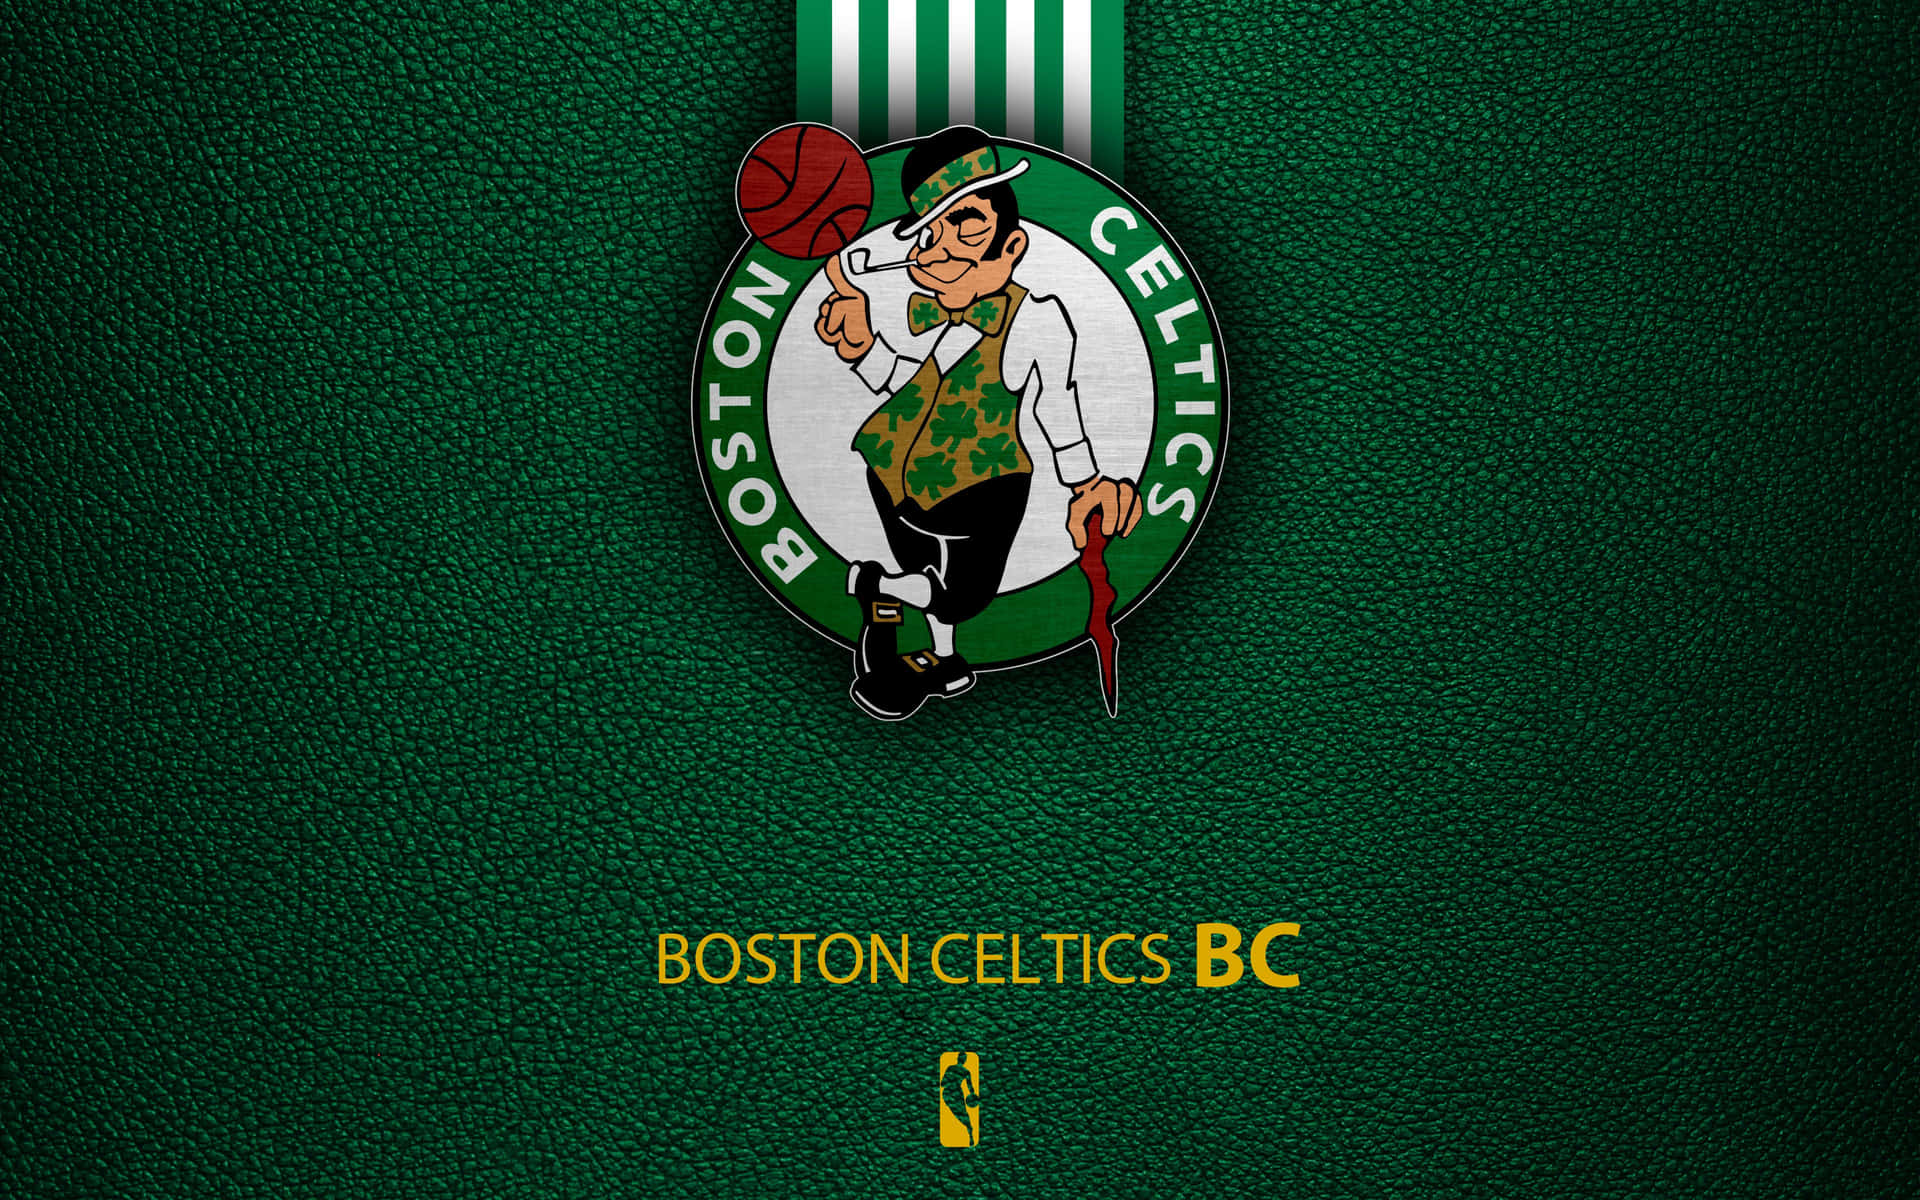 Celticslogotypen. Wallpaper